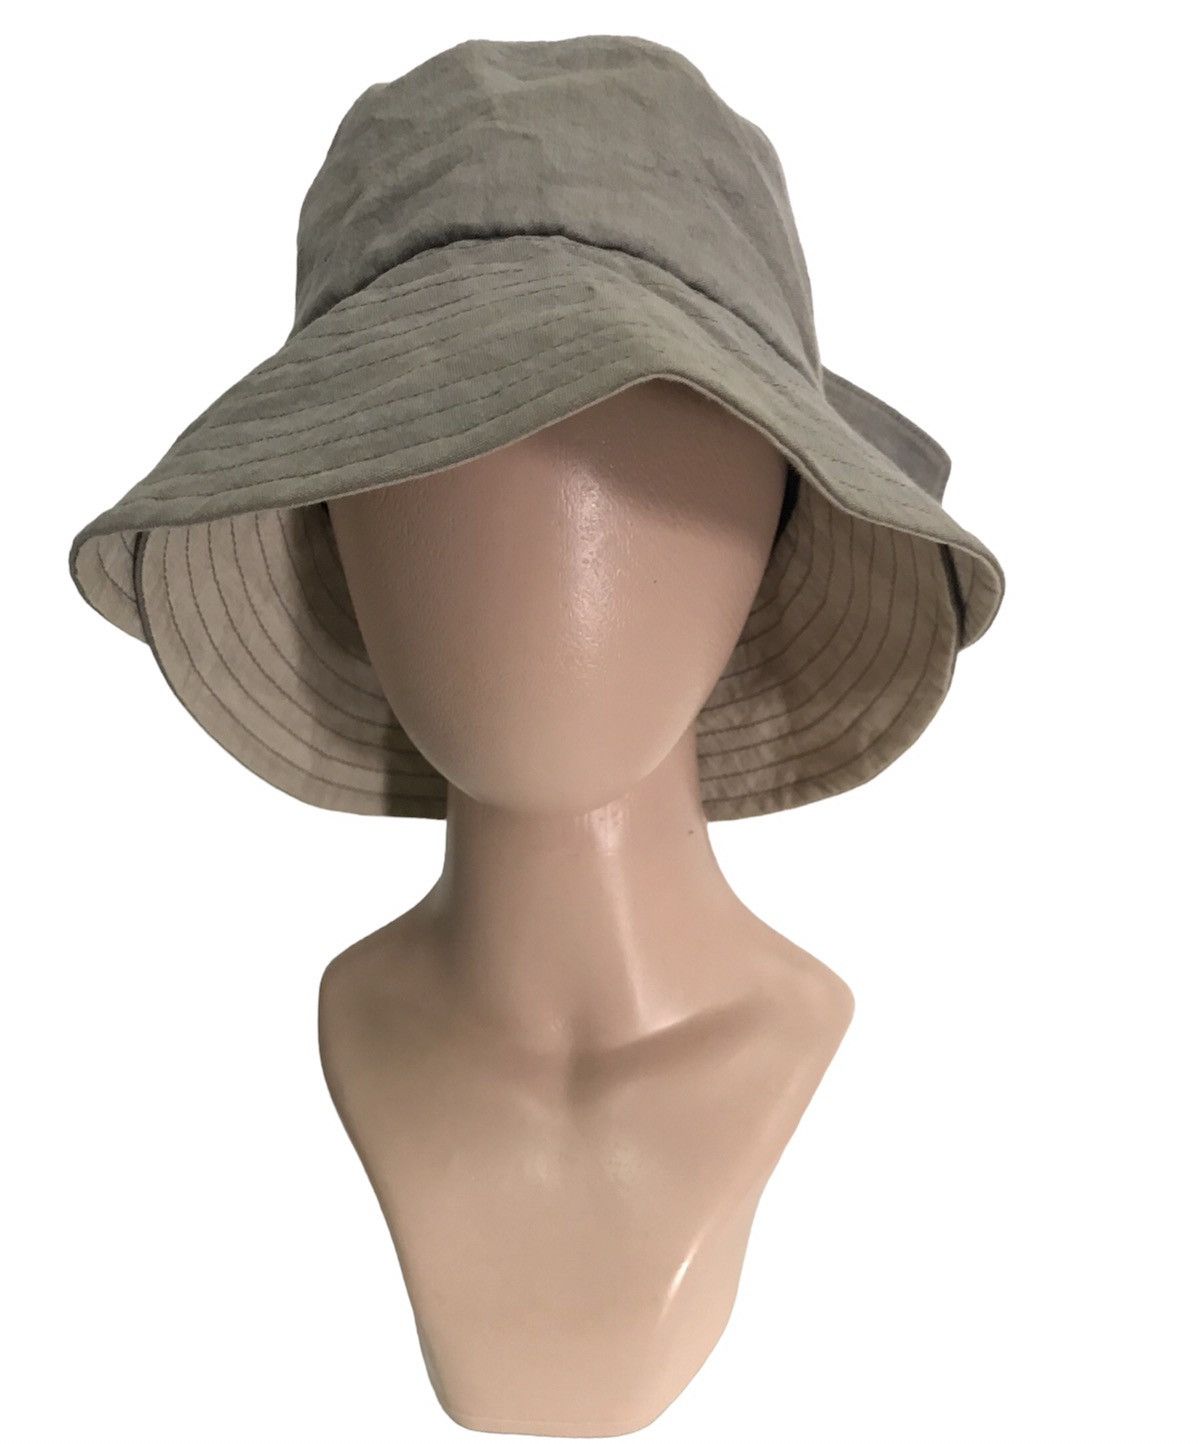 Vivienne Westwood Bucket Hat